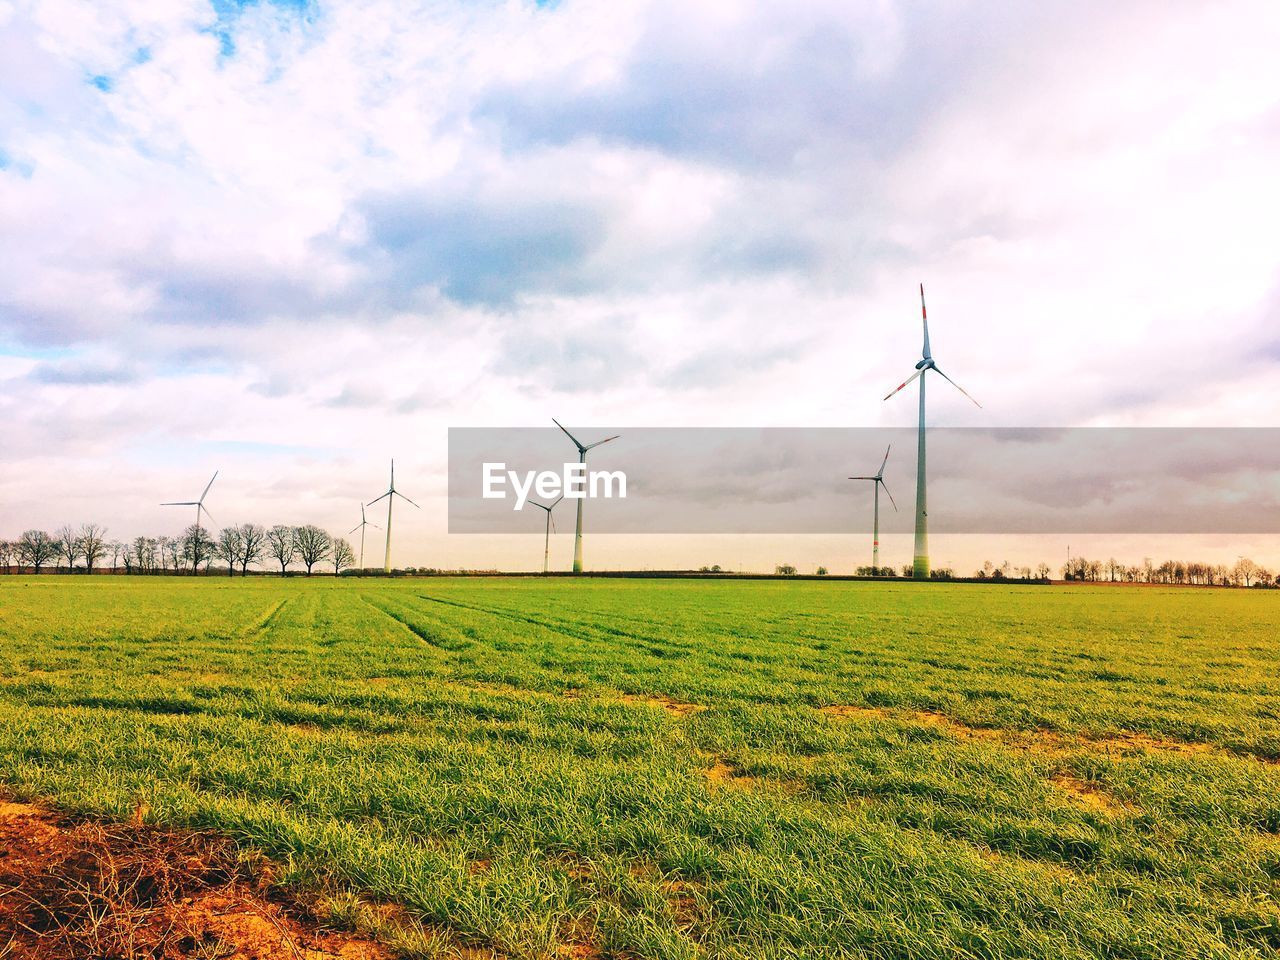 Group of windmills producing green energy in a field near diest belgium